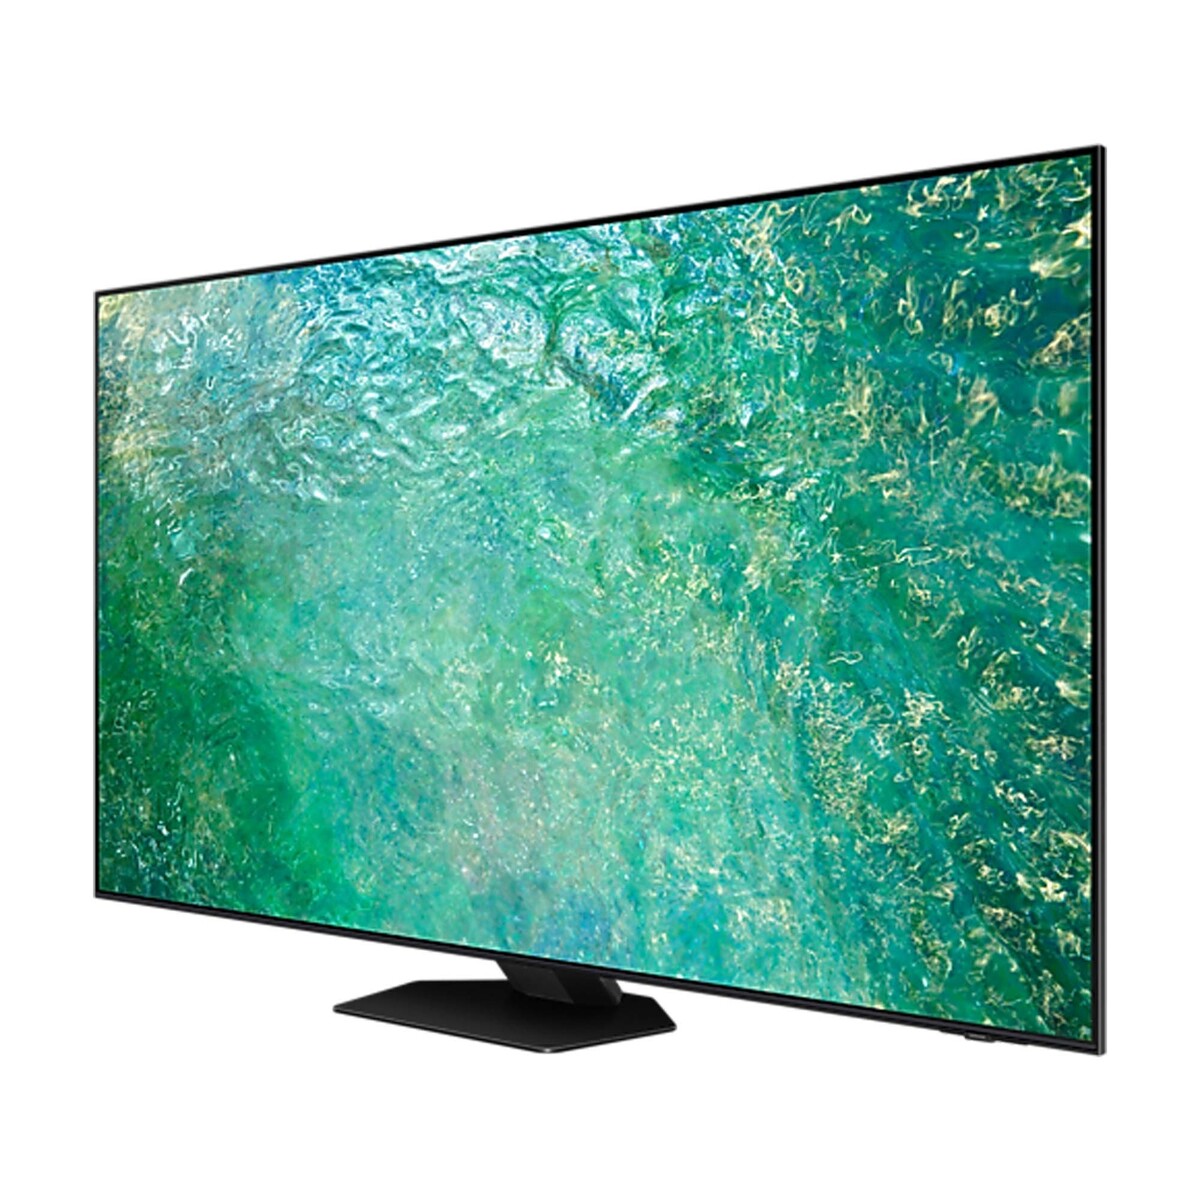 Samsung Neo 55 inches 4K Smart QLED TV, Black, QA55QN85CAUXZN